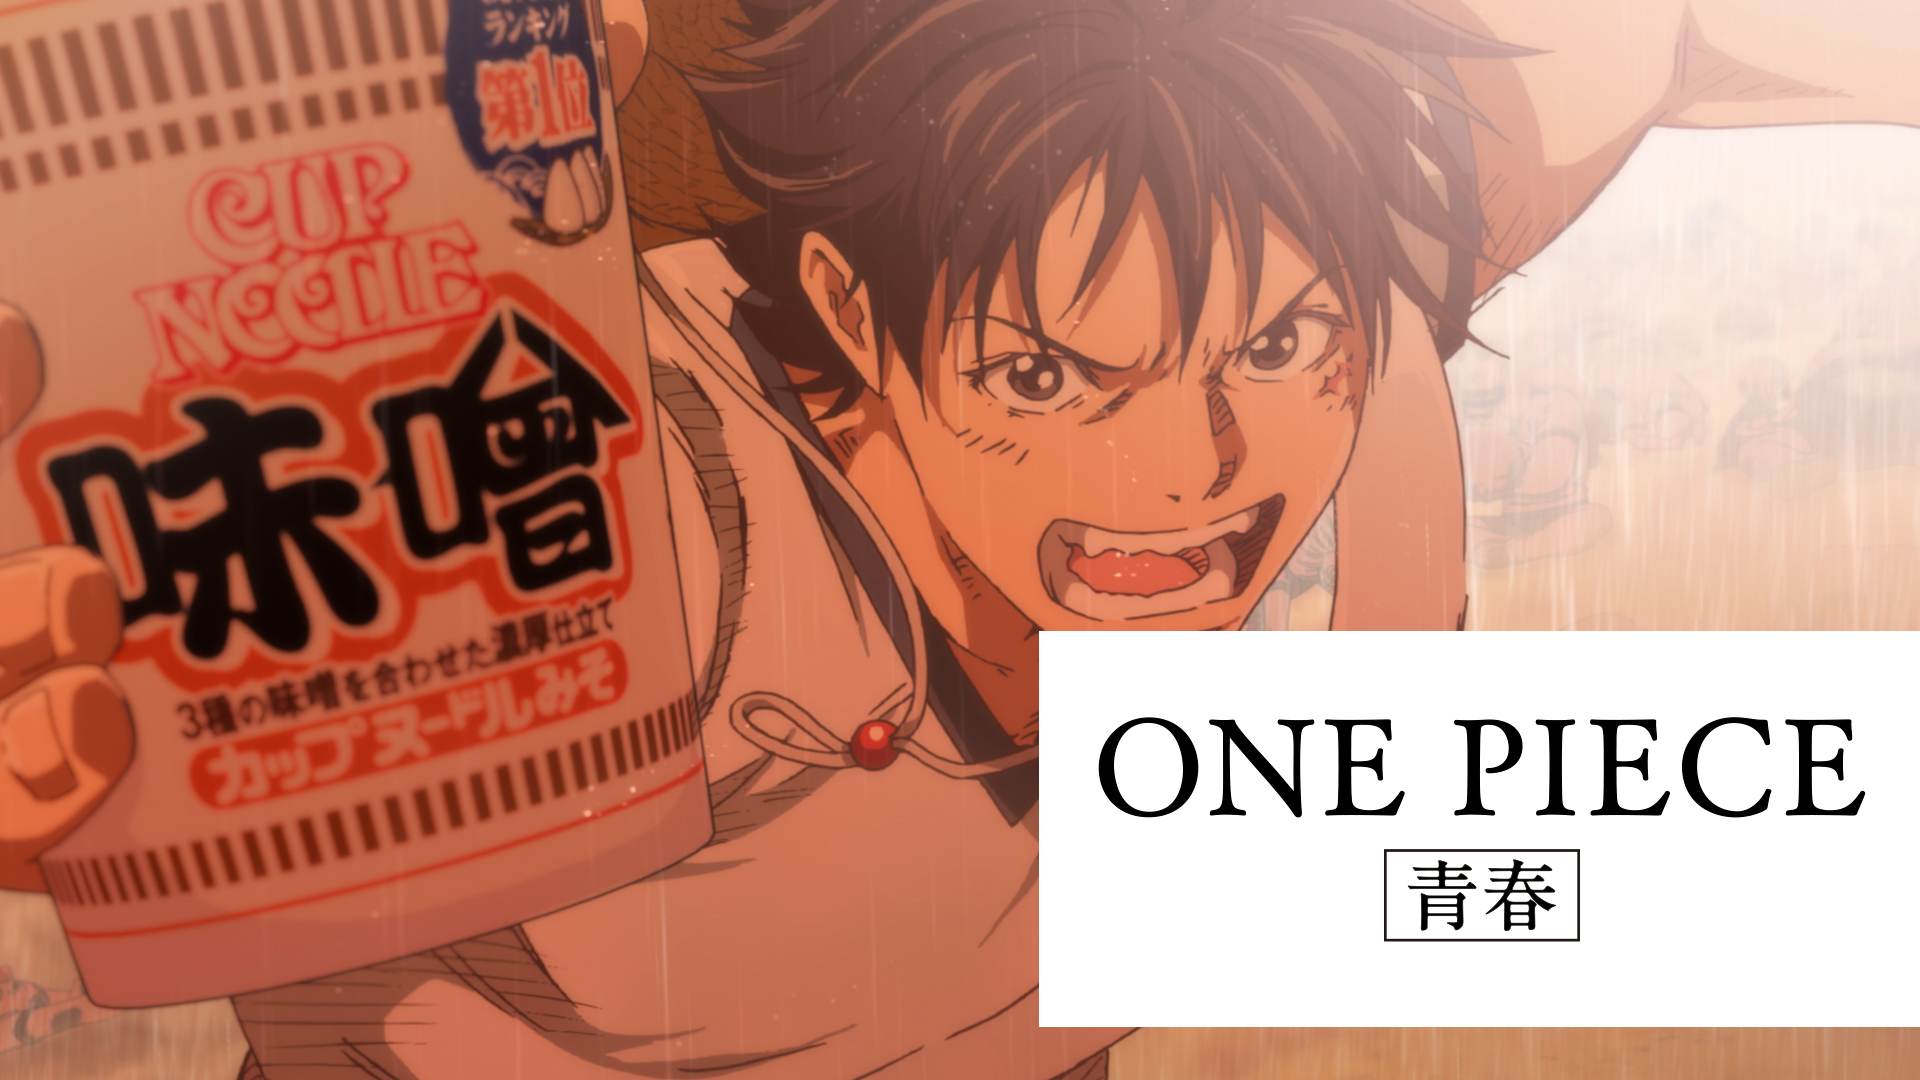 One Piece Vans Authentic Release Date  SneakerNewscom